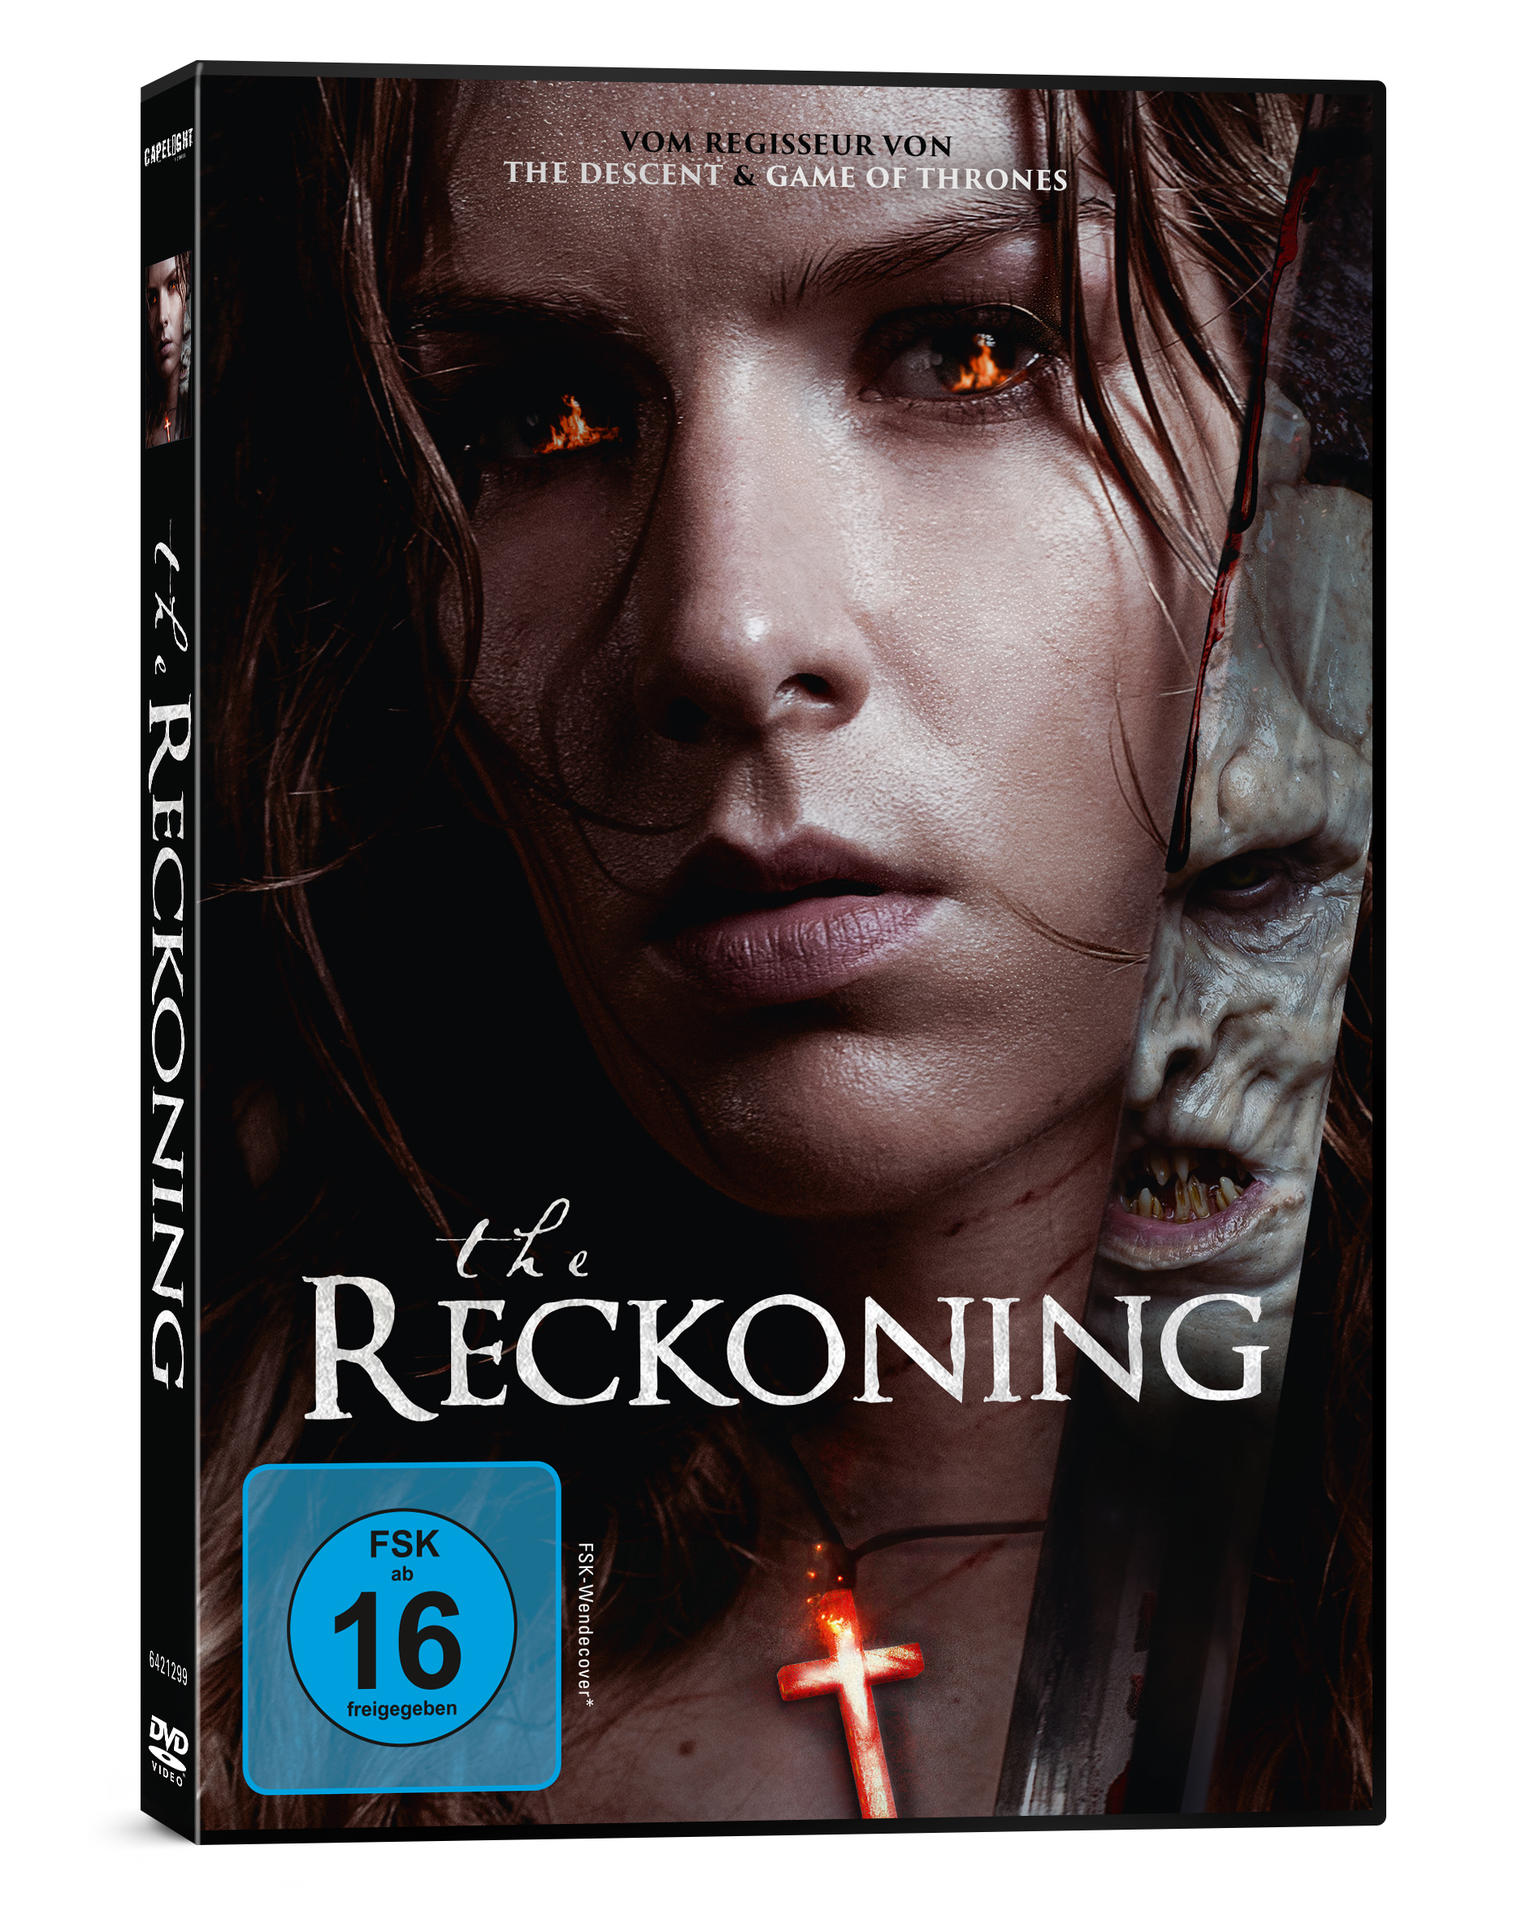 The DVD Reckoning